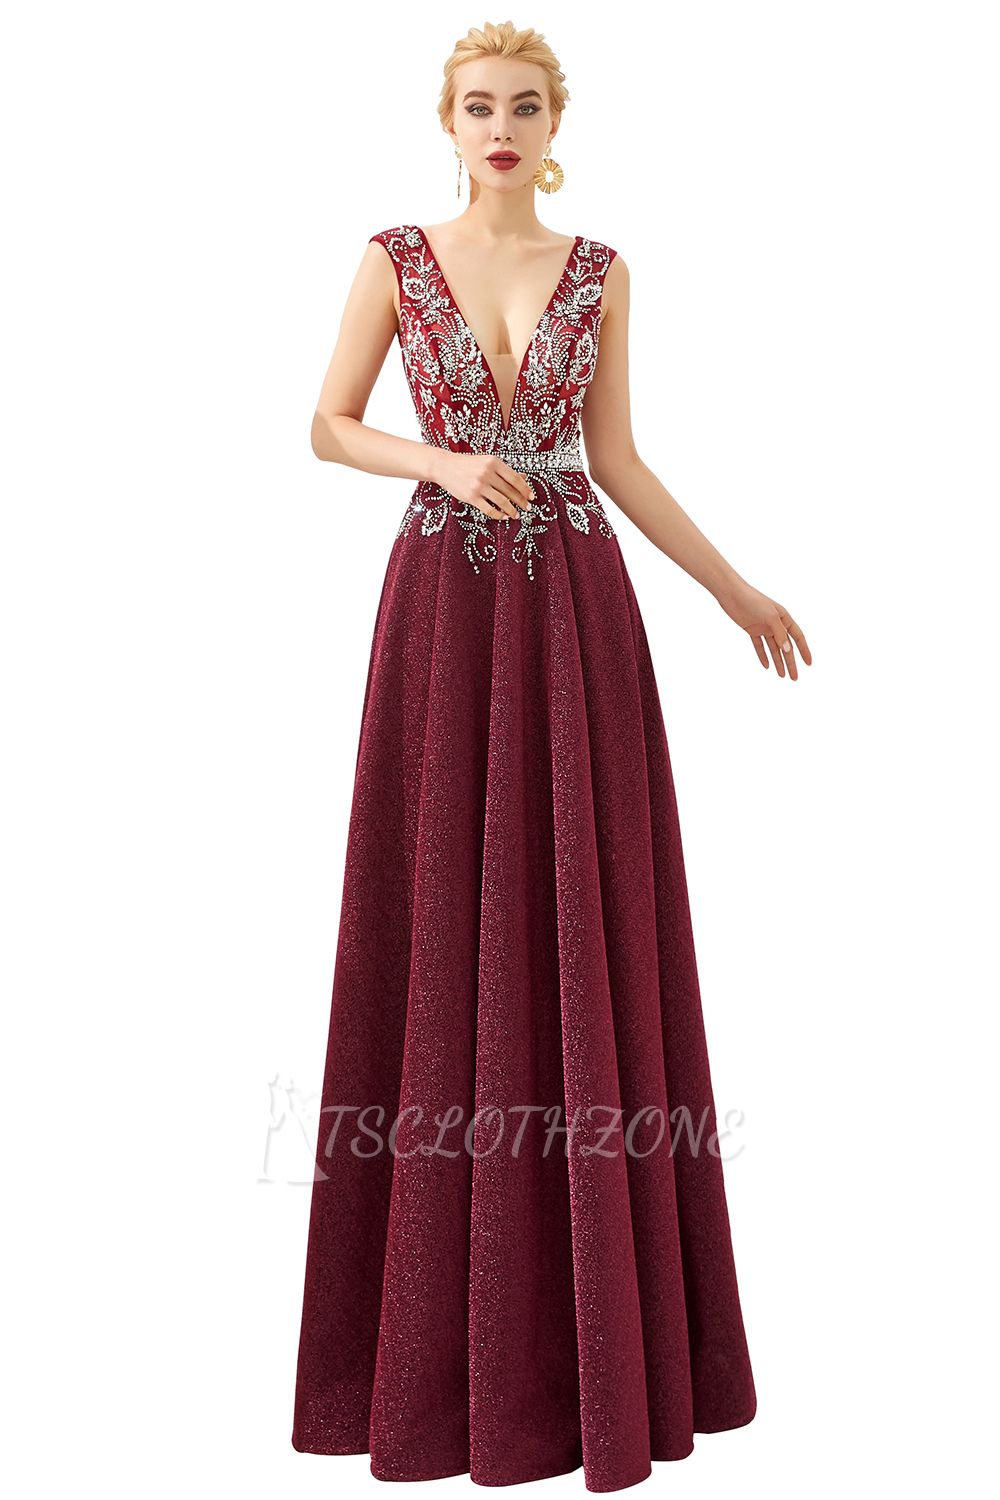 Caitin Catherine | Sexy V-neck Burgundy Sparkle Prom Dresses, Custom made Sleeveless Backless Evening Gowns